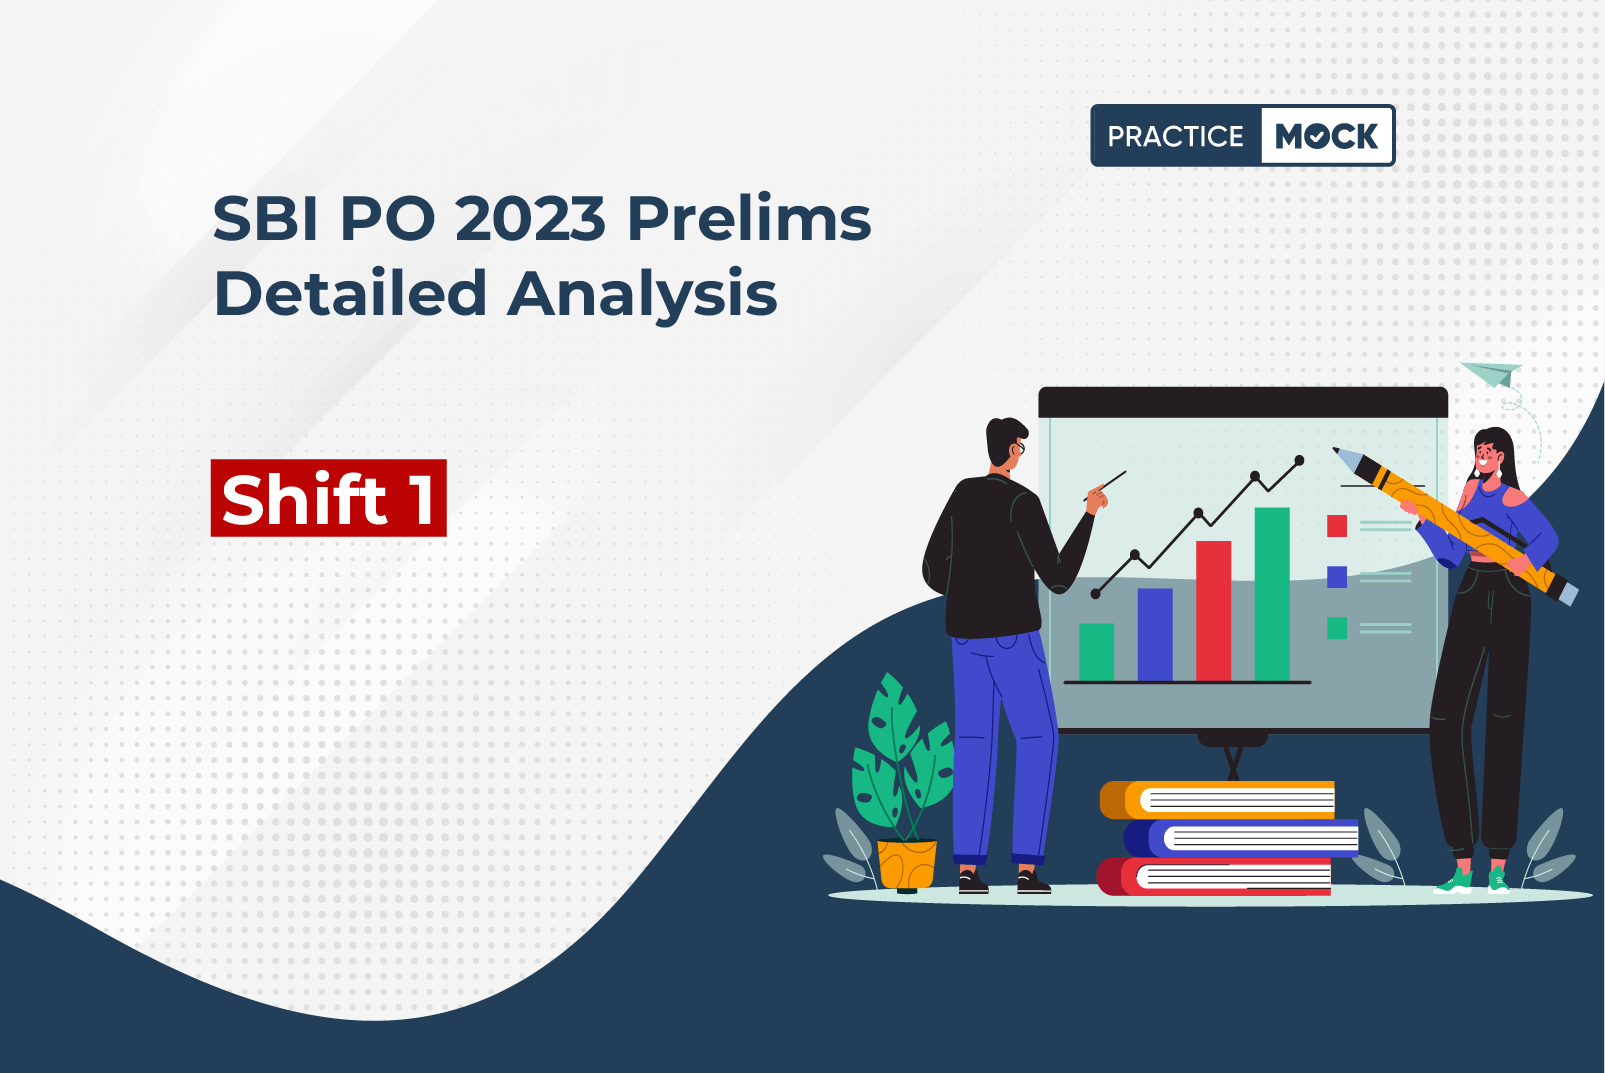 SBI PO 2023 Prelims Shift 1 Detailed Analysis (1)